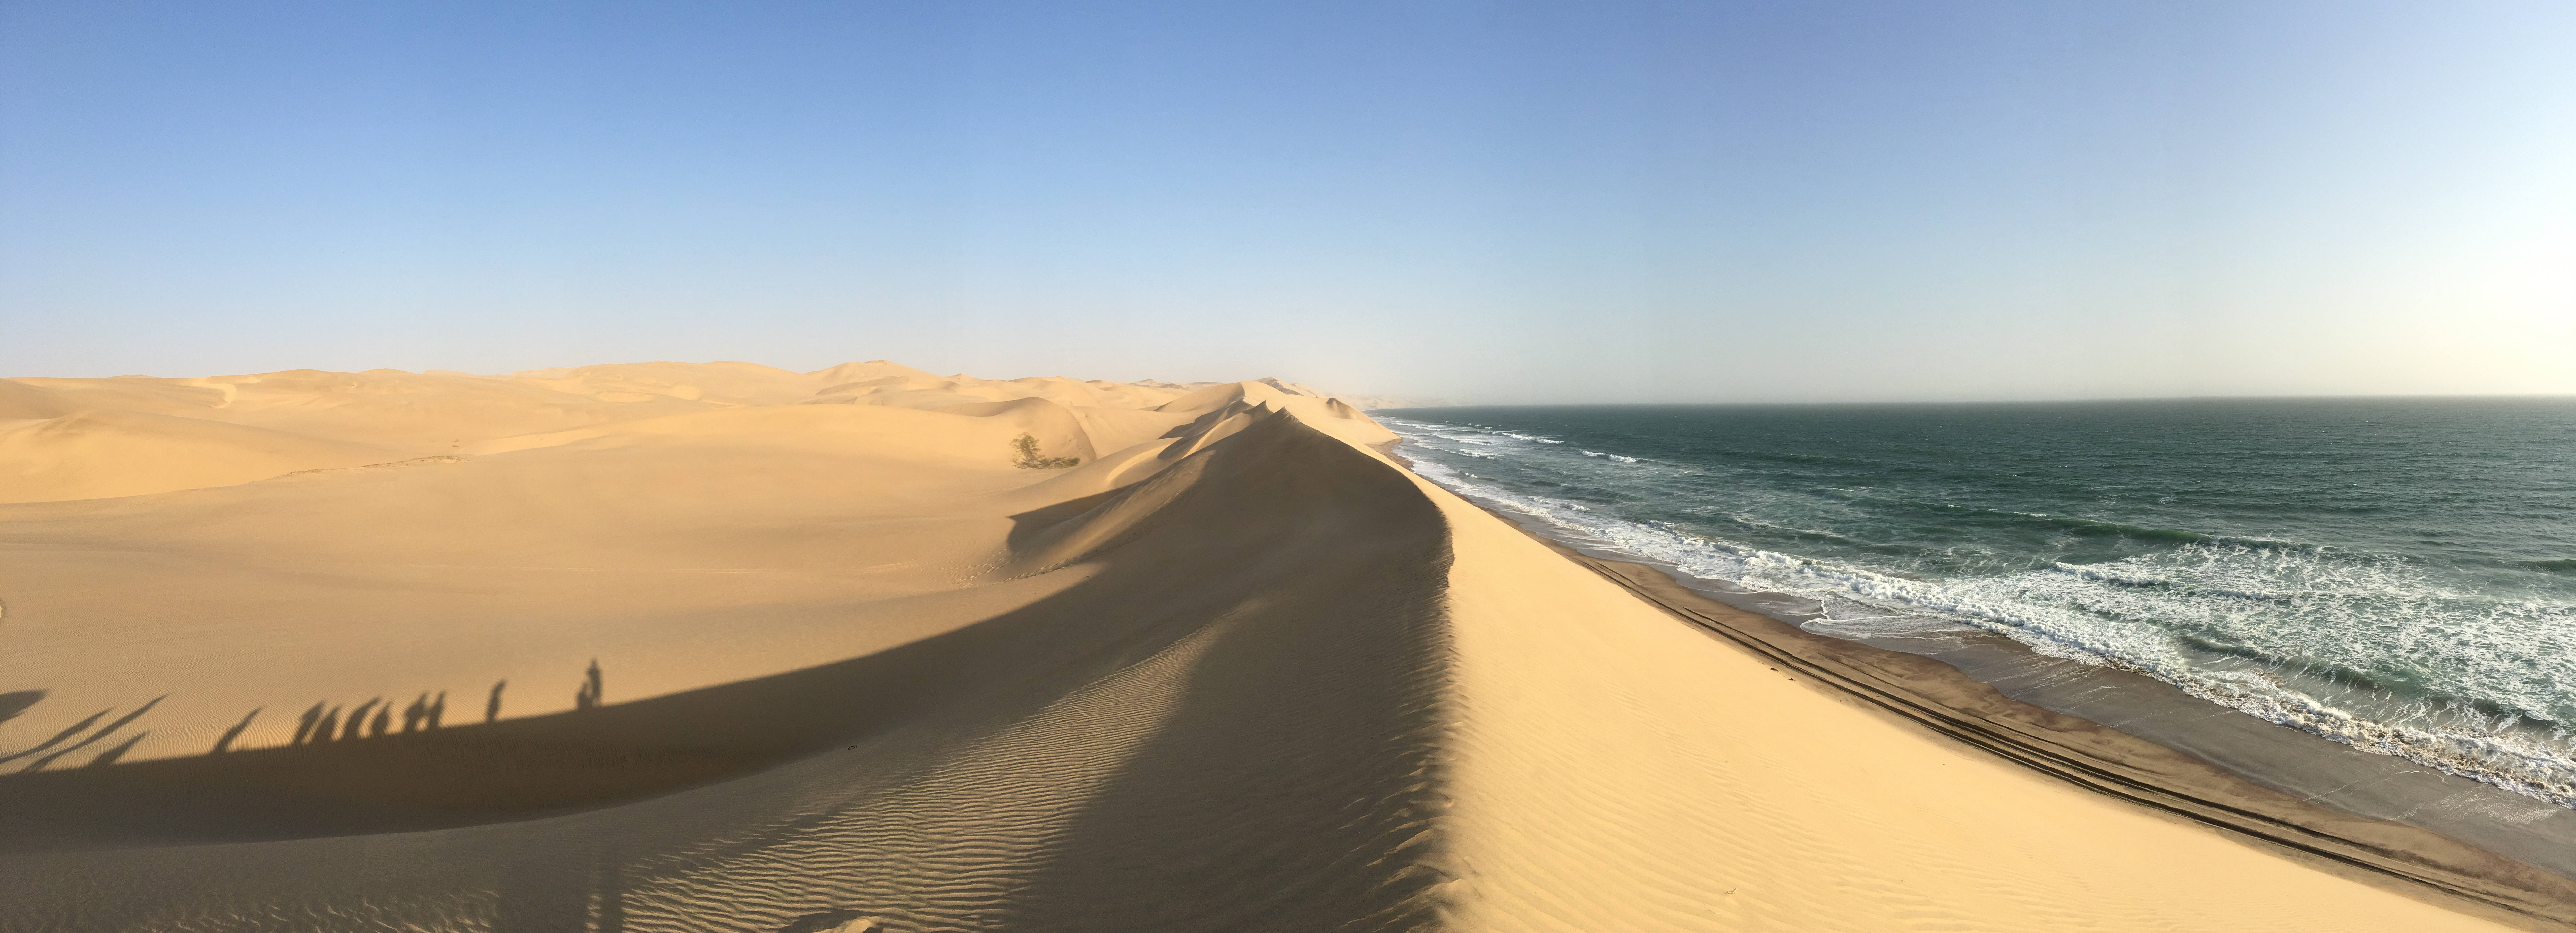 Namibia - Sandwich Bay.jpg